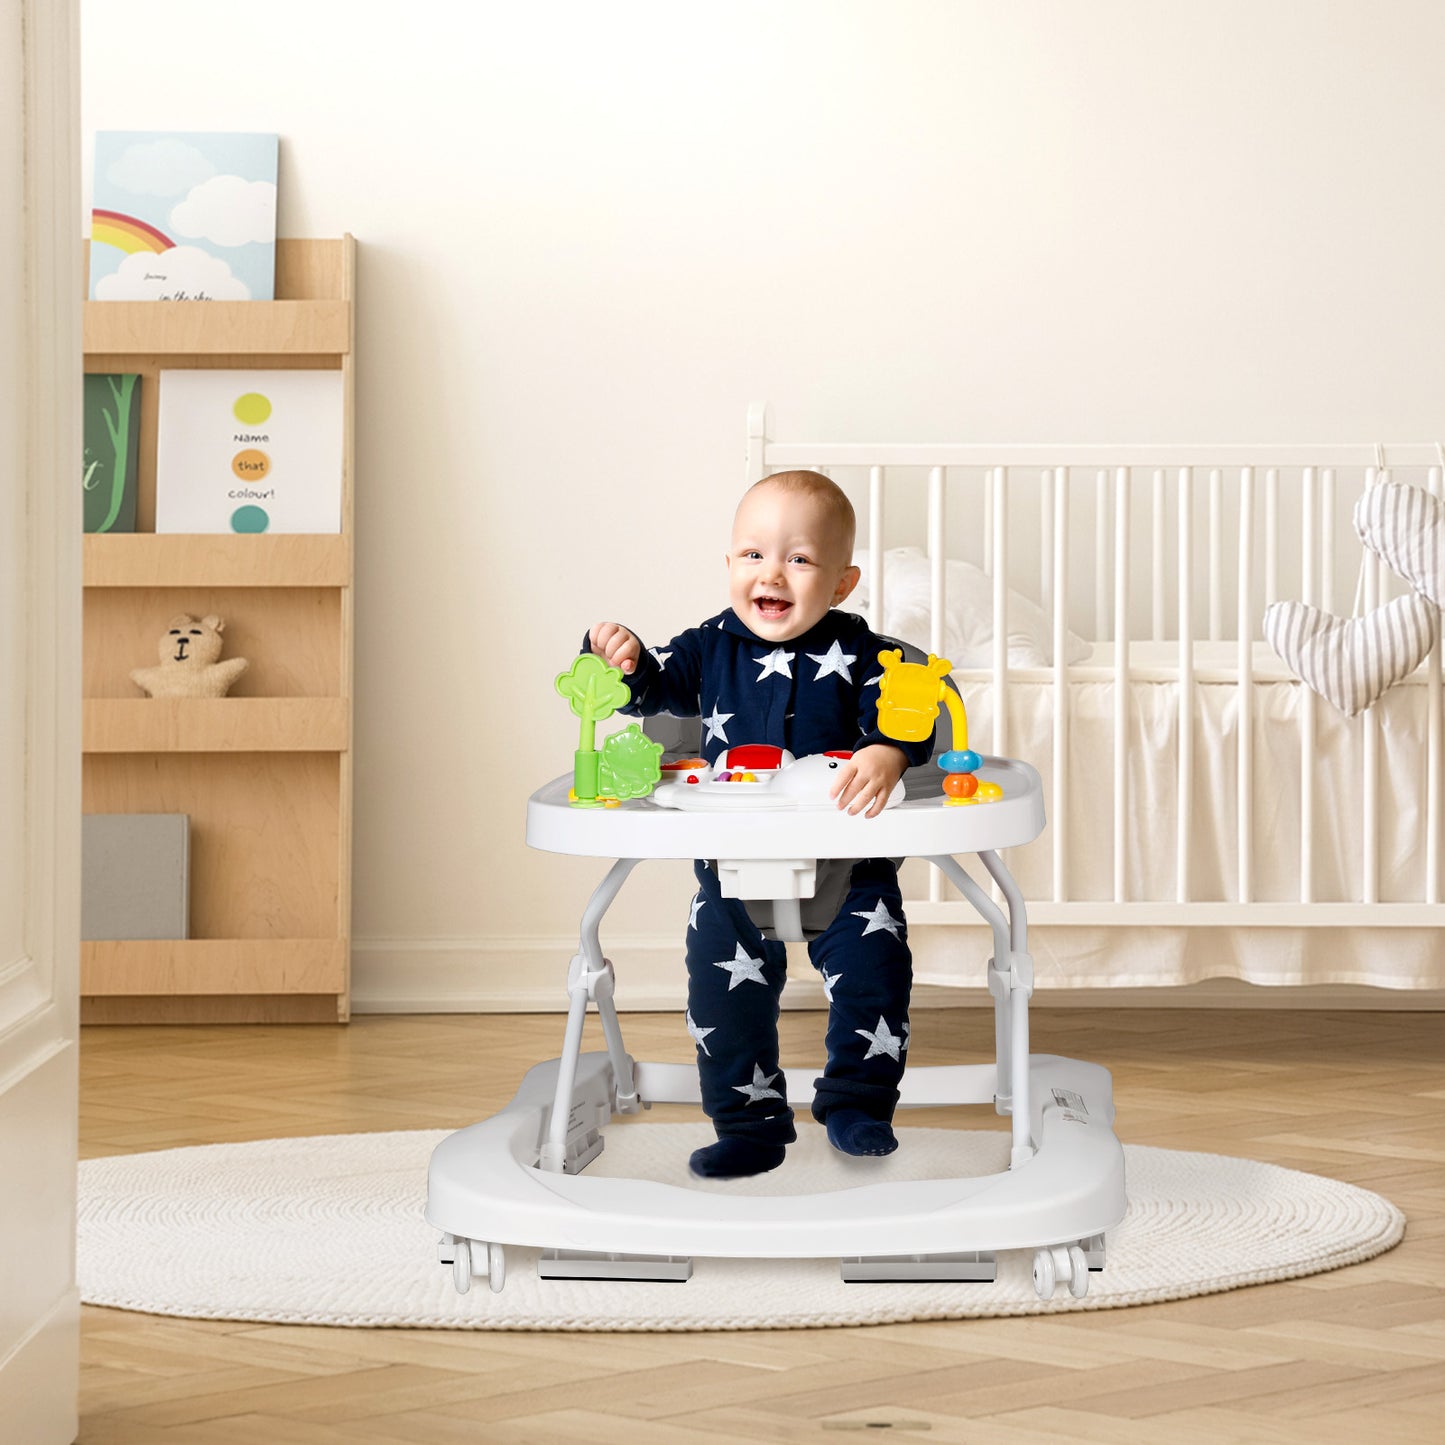 2 in 1 Folding Baby Walker Adjustable Height & Speed, Kids Baby Walker with Wheels & Music Toys, Grey